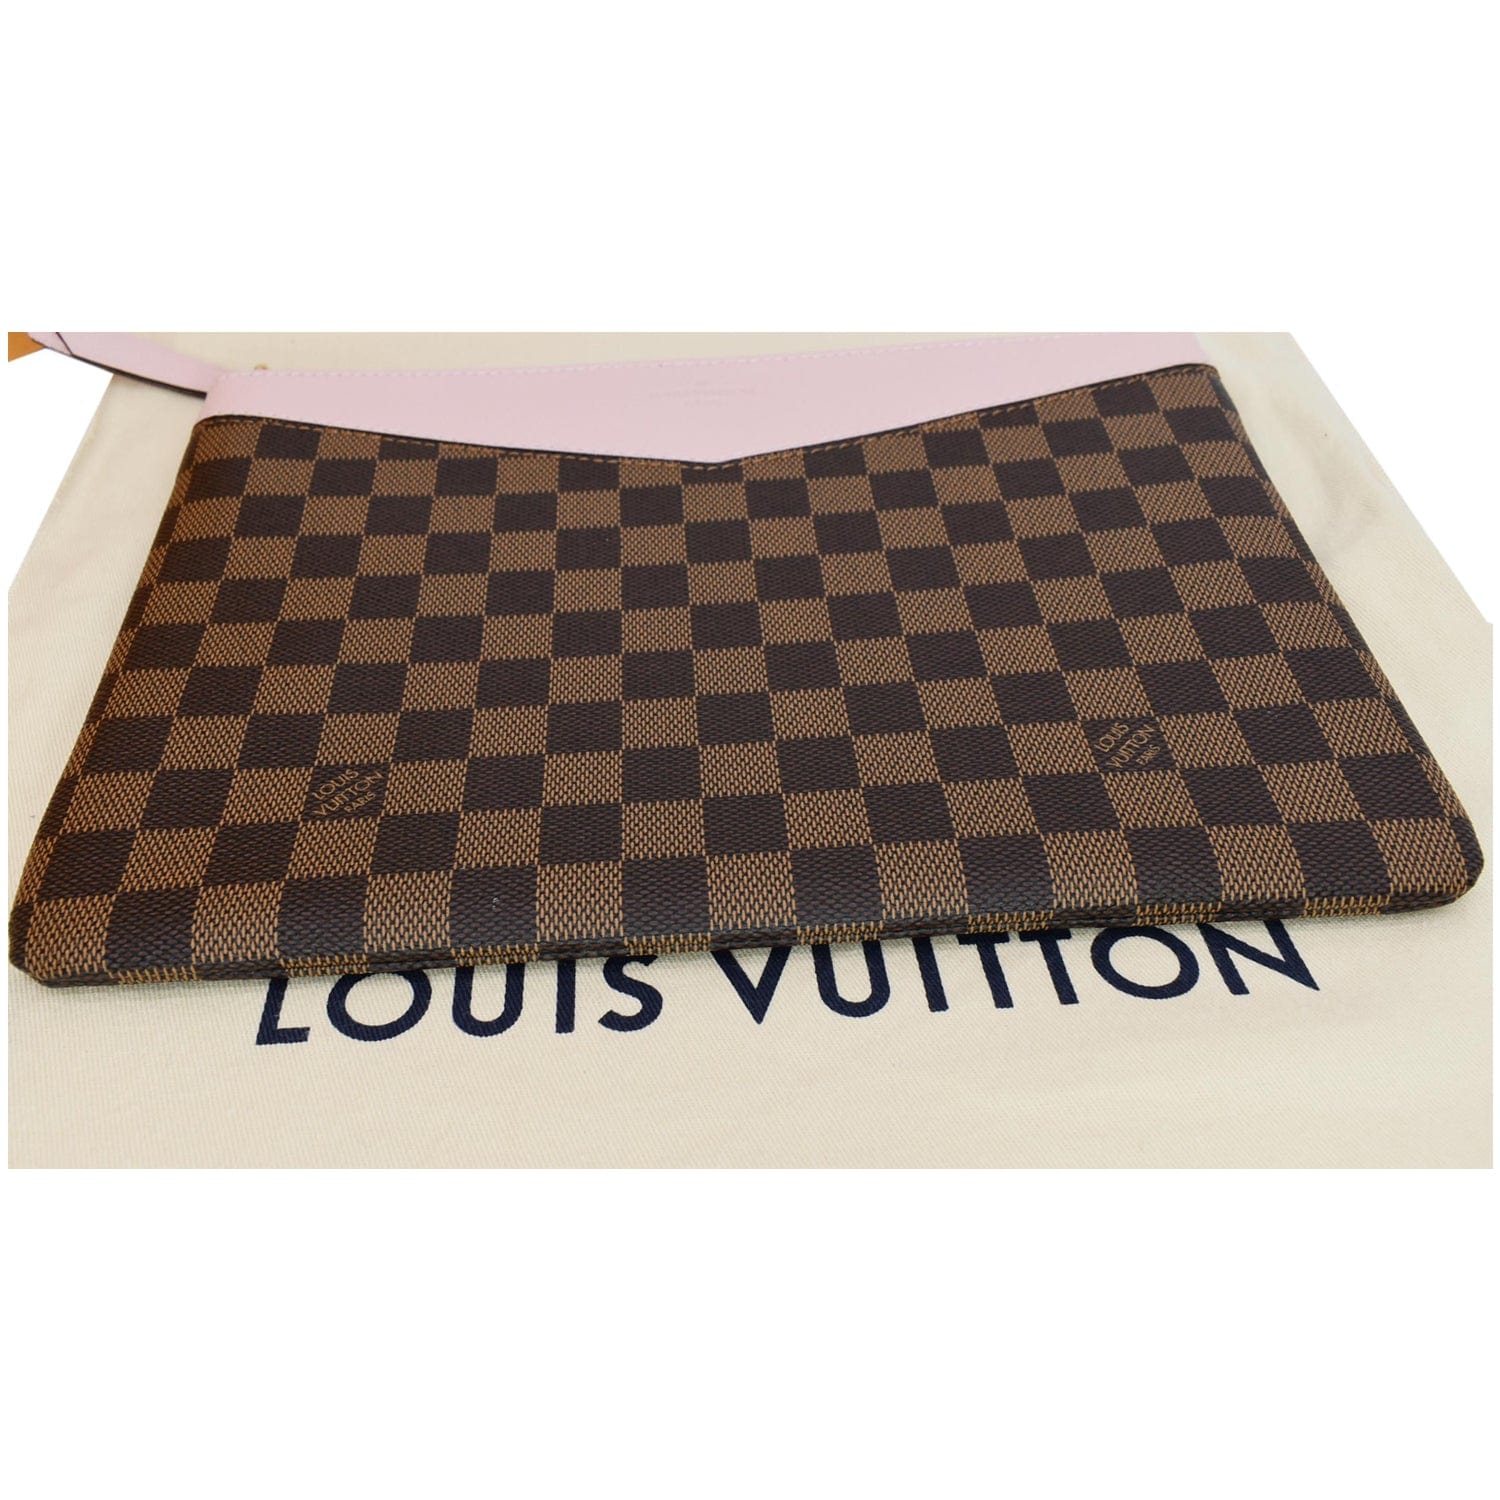 Louis Vuitton Daily Pouch Rose Poudre Unboxing ❤️❤️ 